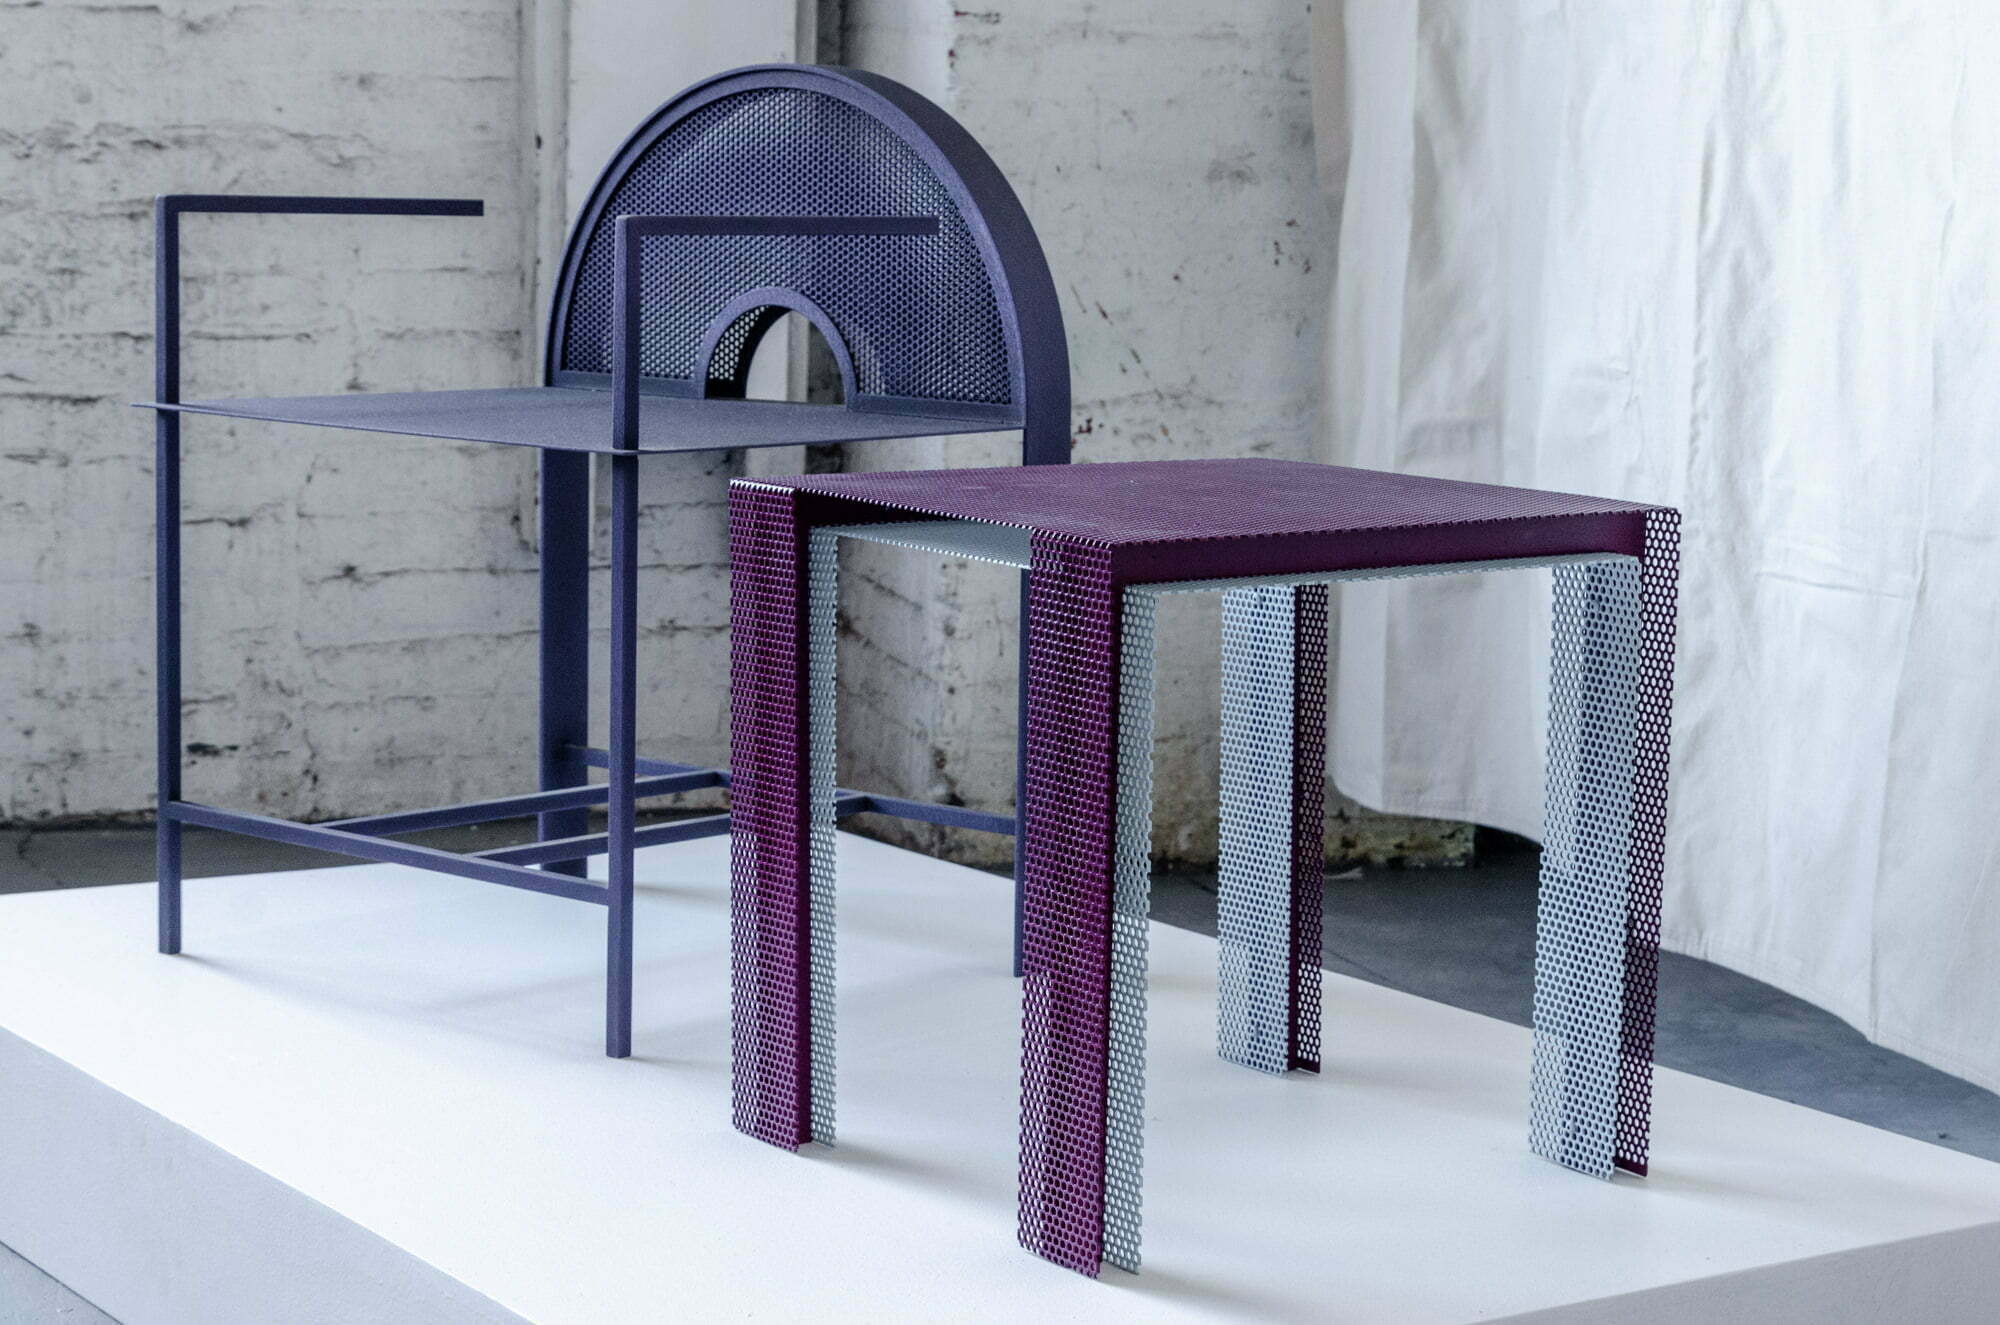 Furniture Design, NYCxDesign